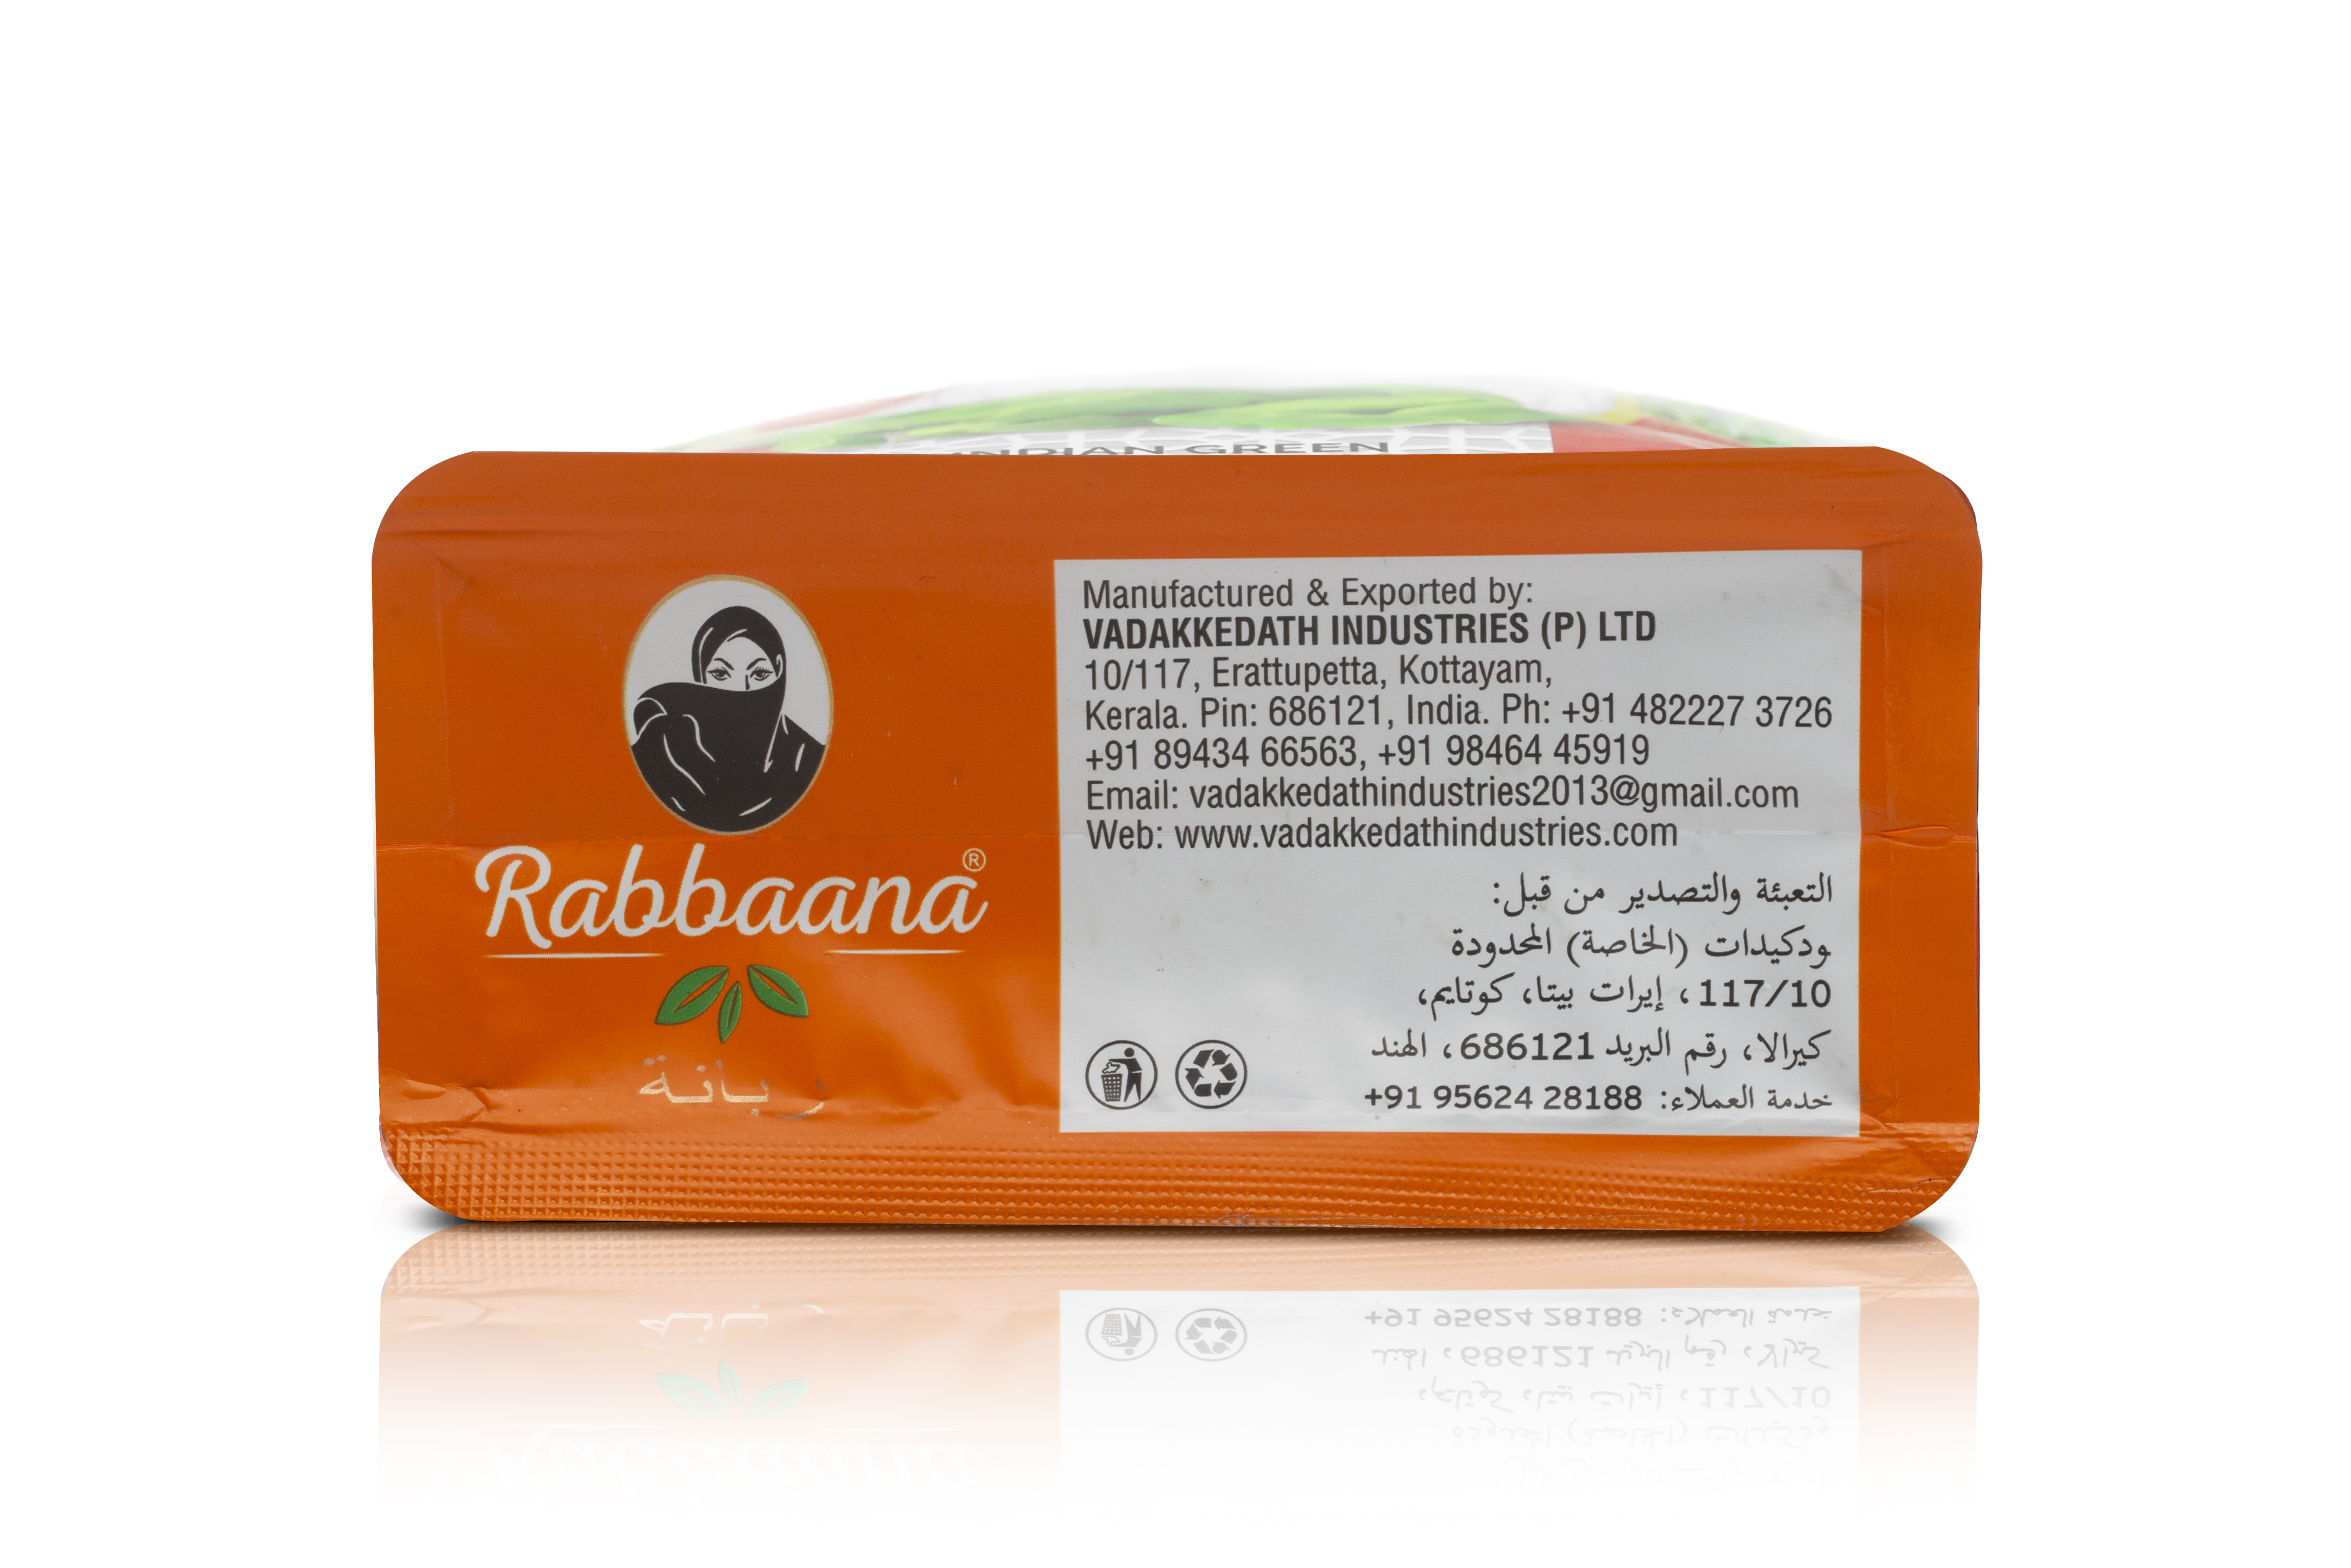 Rabbaana Worlds Best Green Cardamom producers & exporters